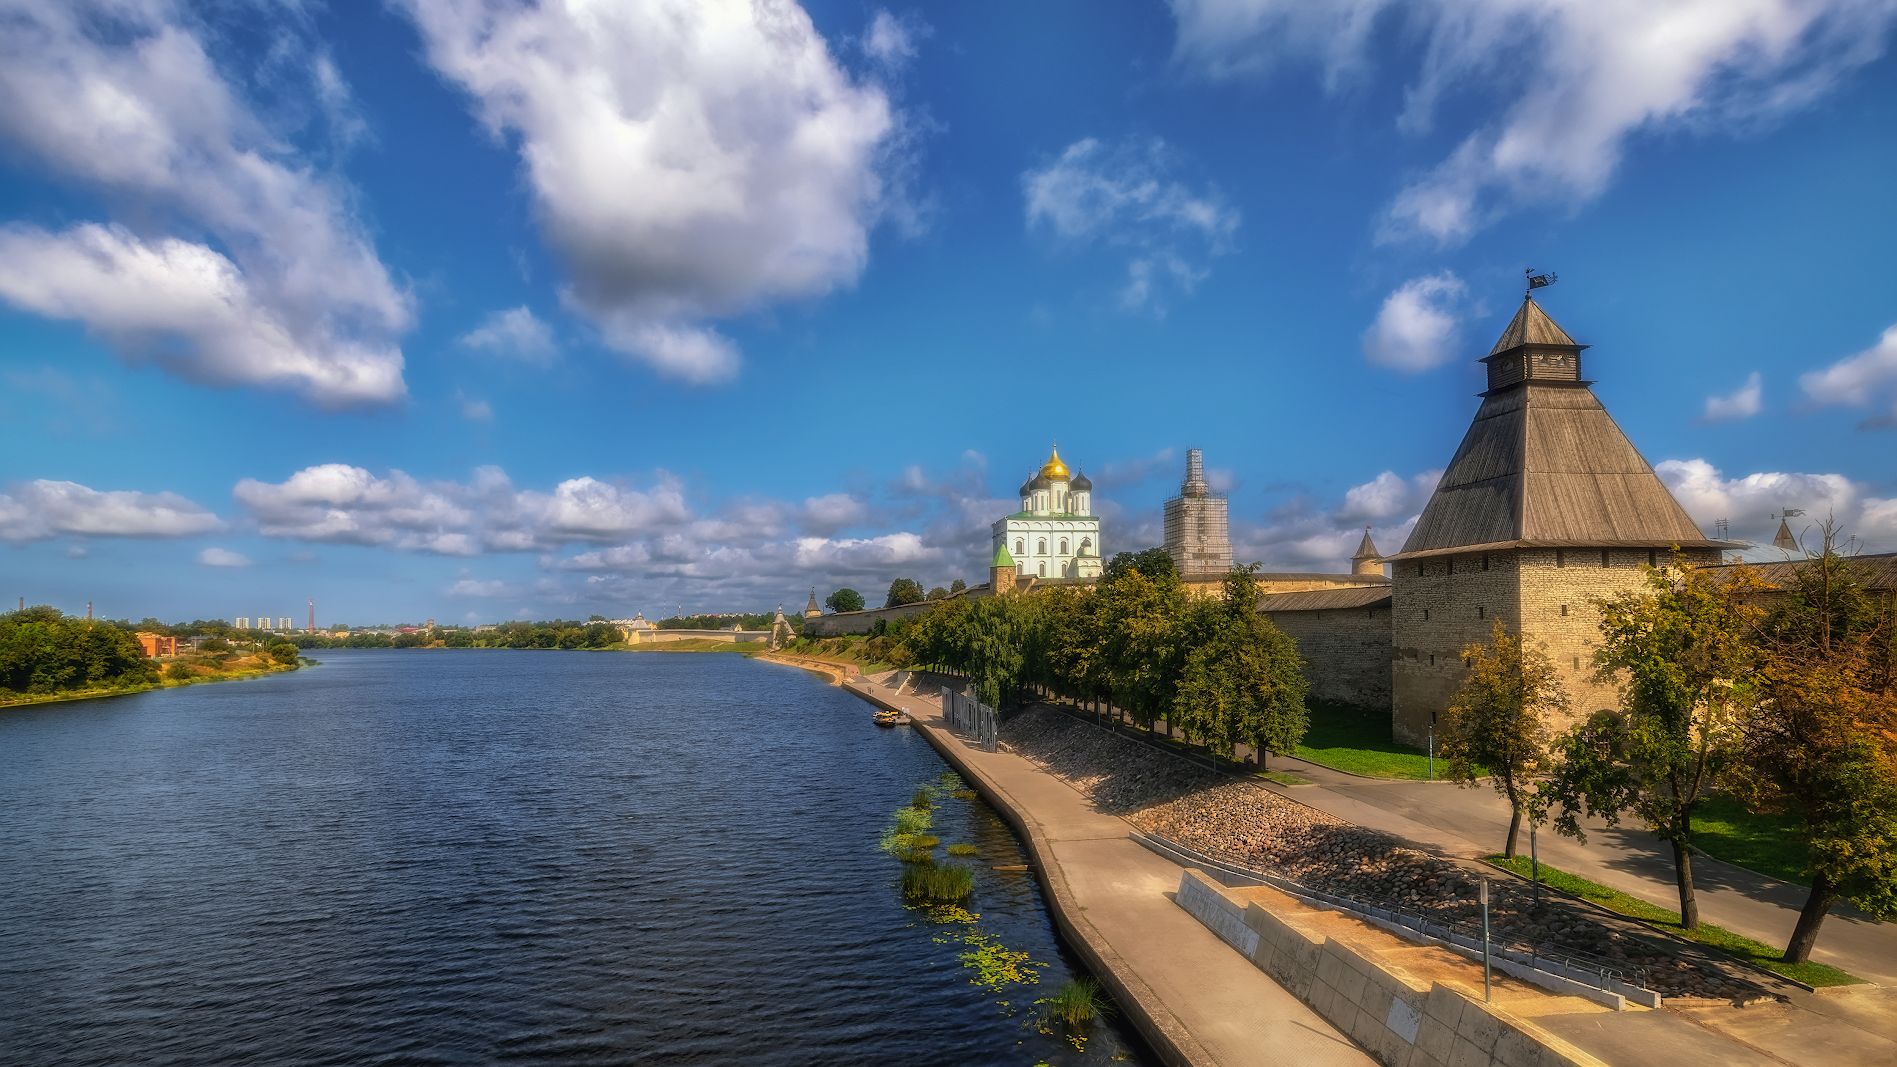 псков река великая лето кремль небо облака, Константин Скороходов